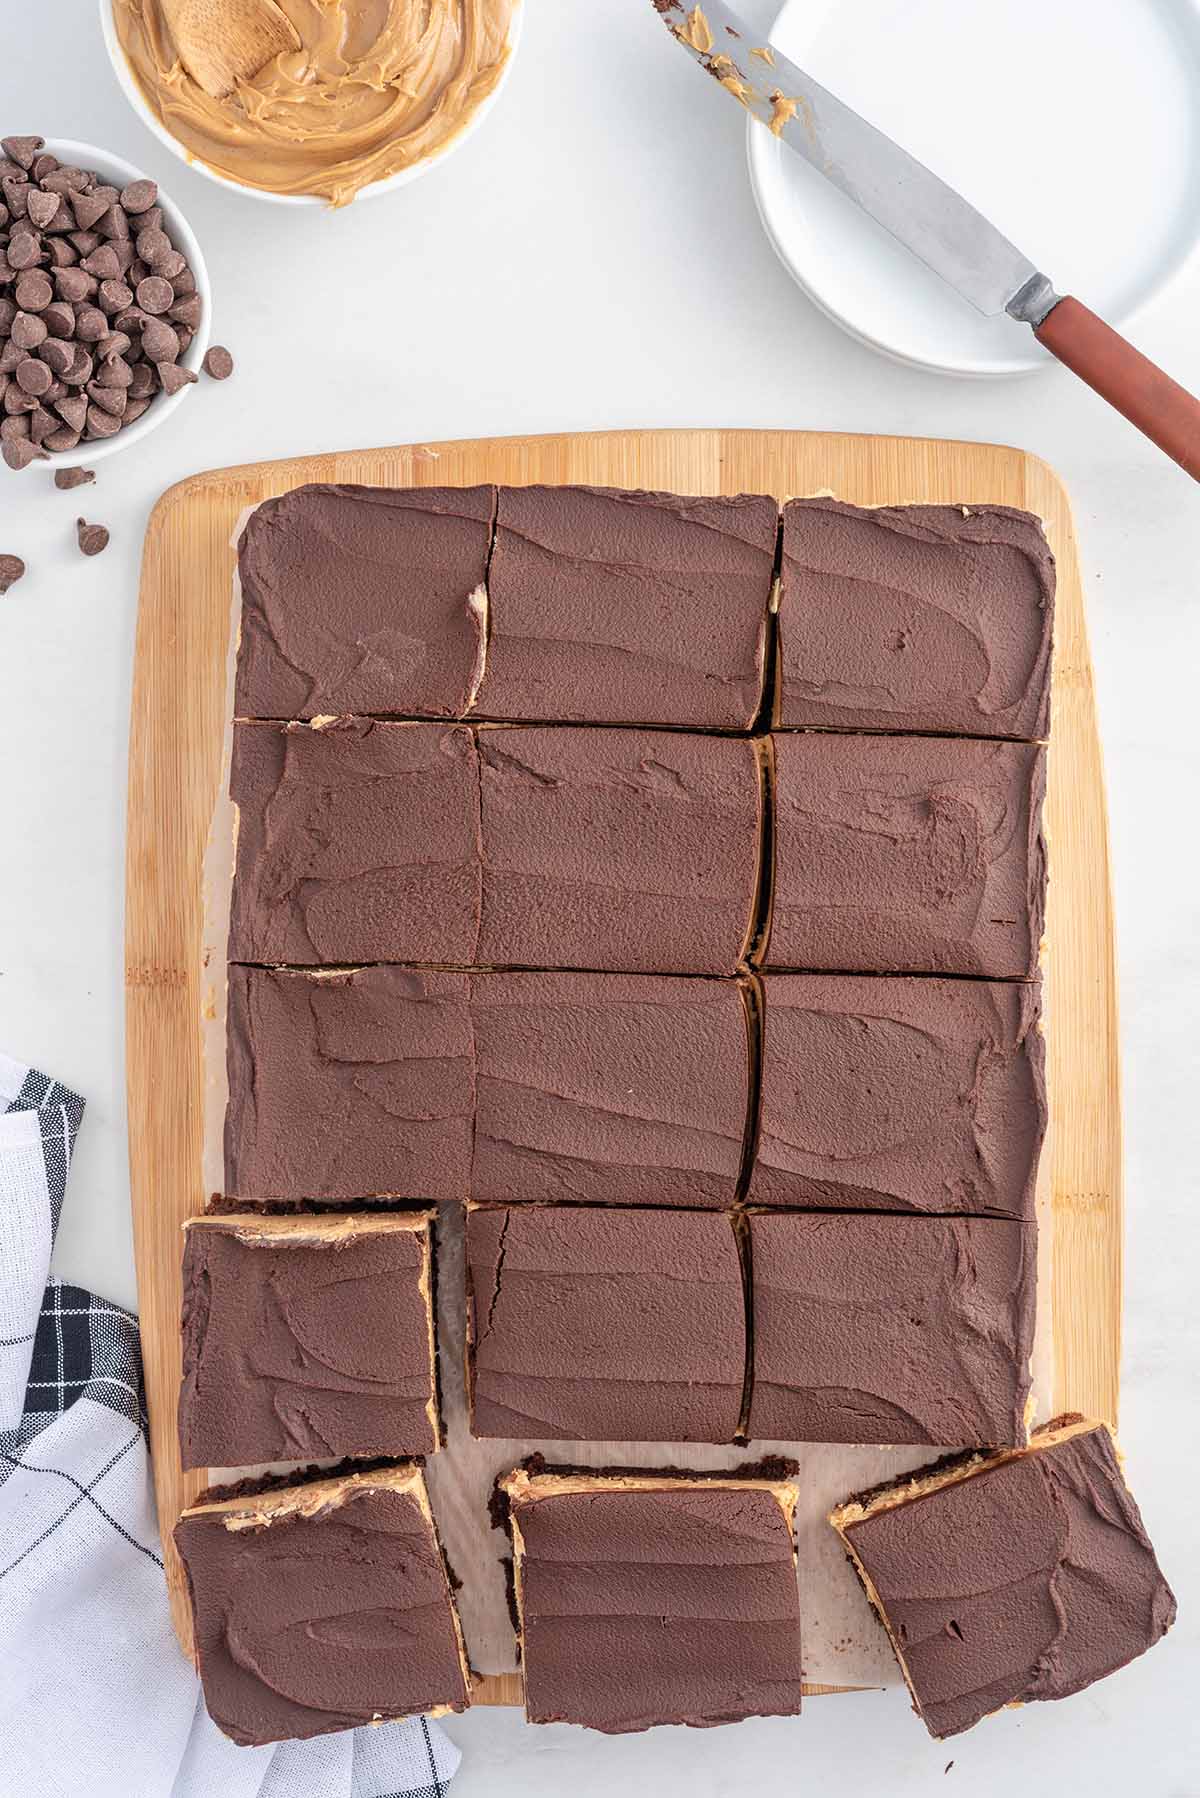 buckeye brownies cut into squares